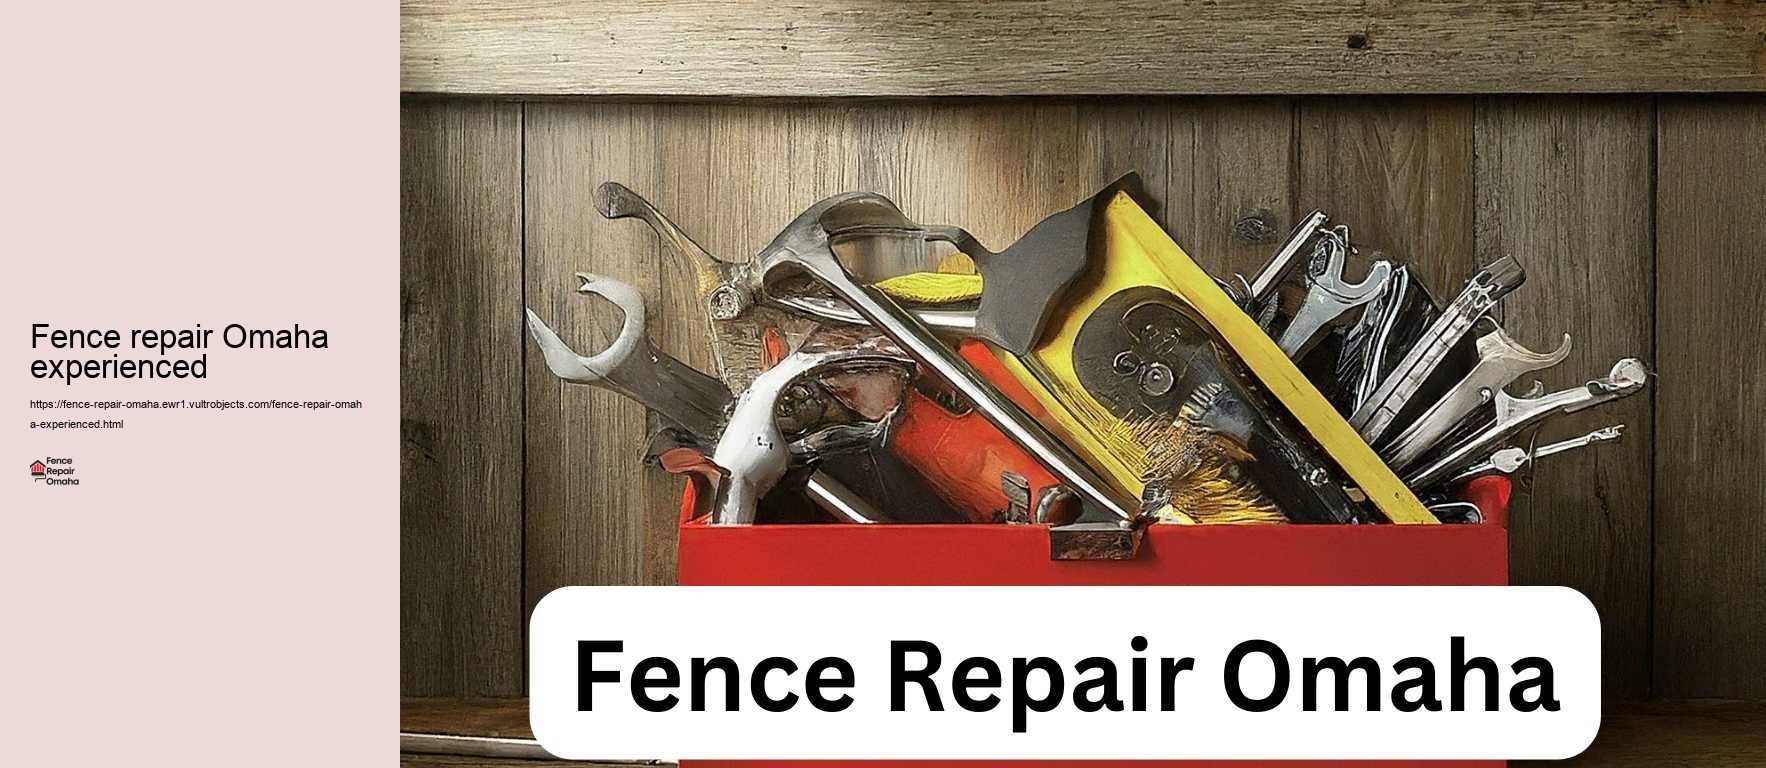 Fence repair Omaha experienced